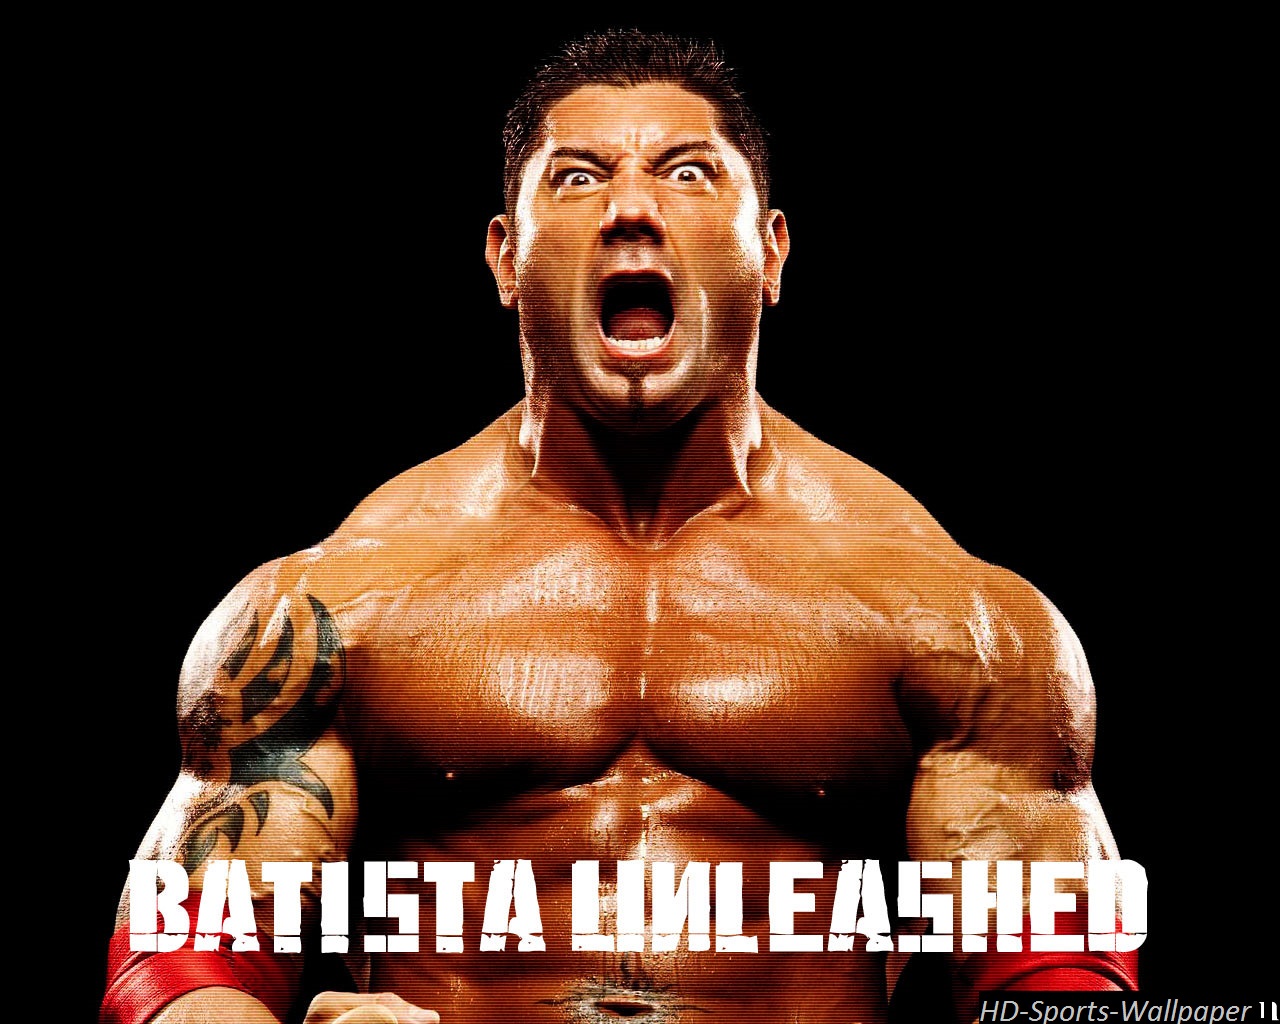 Batista The Animal